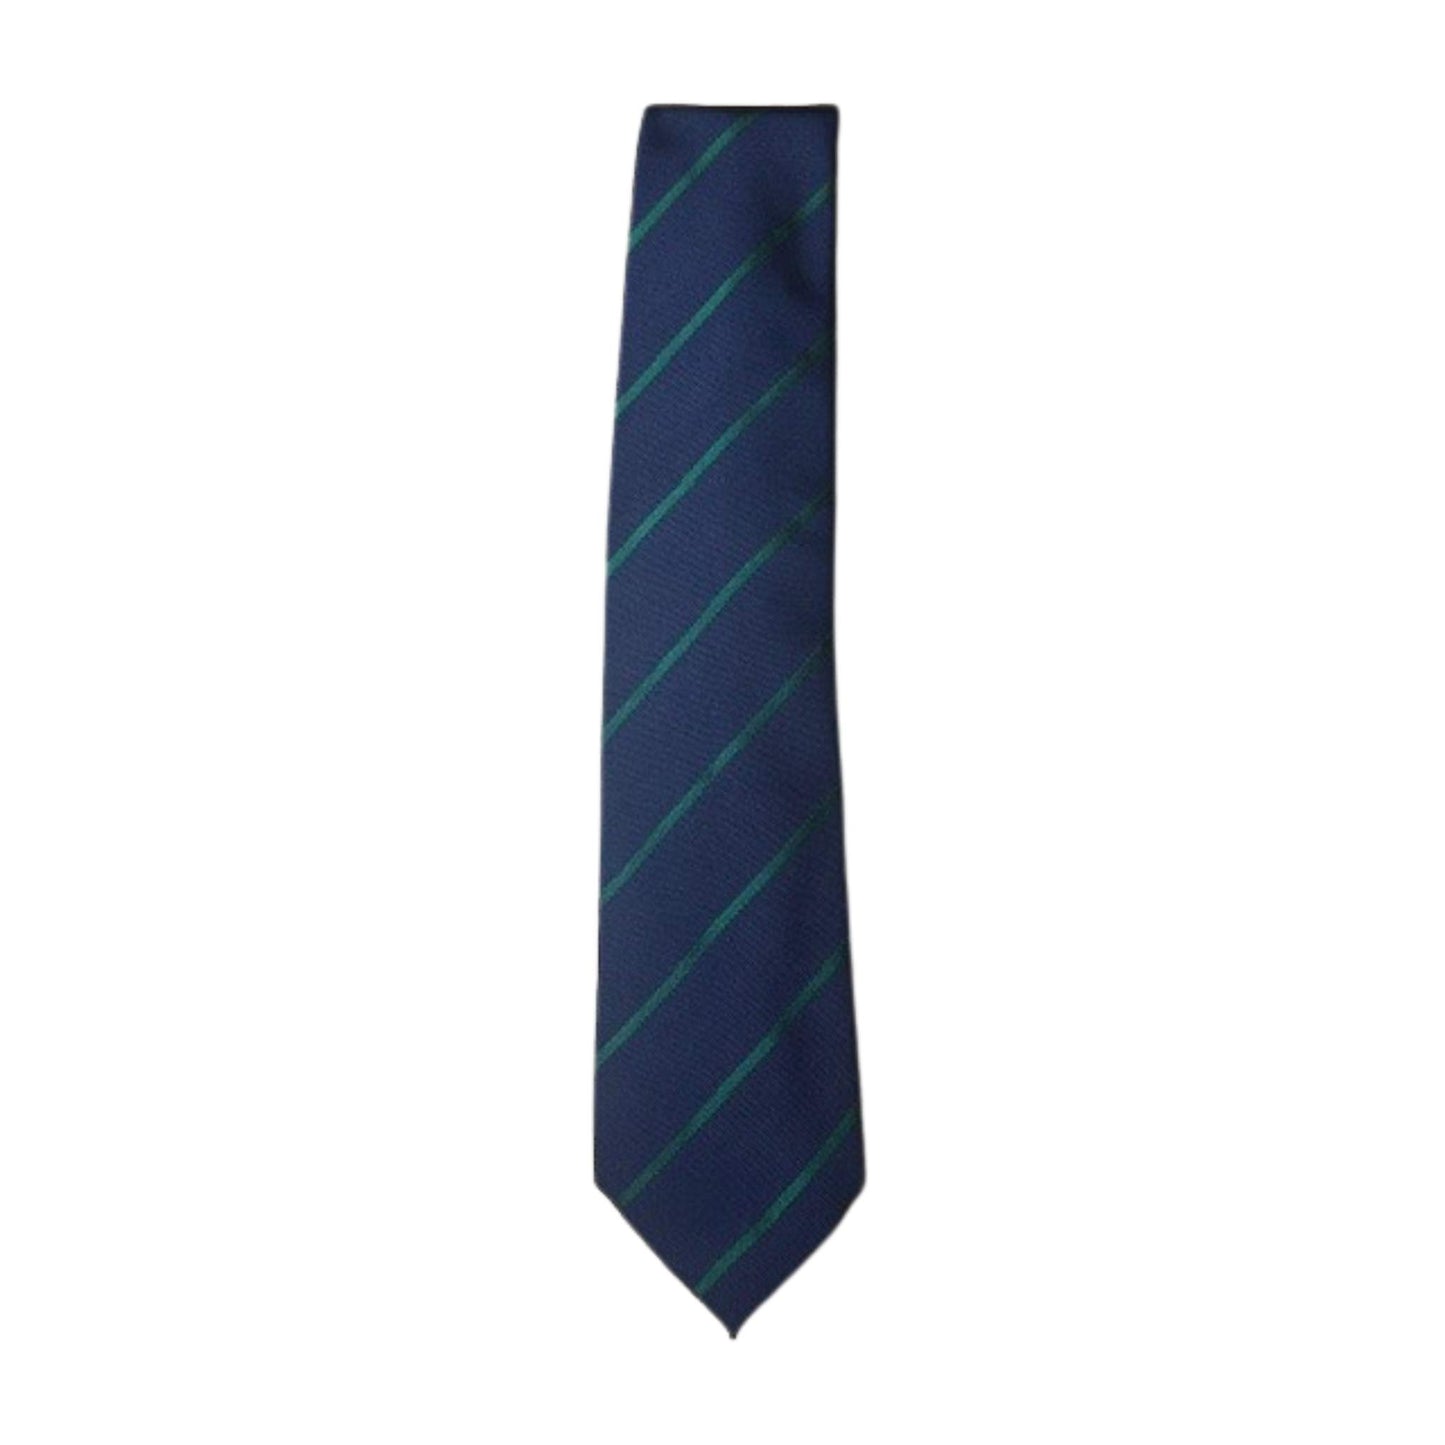 Rhodes Wood  Navy and Green stripe tie